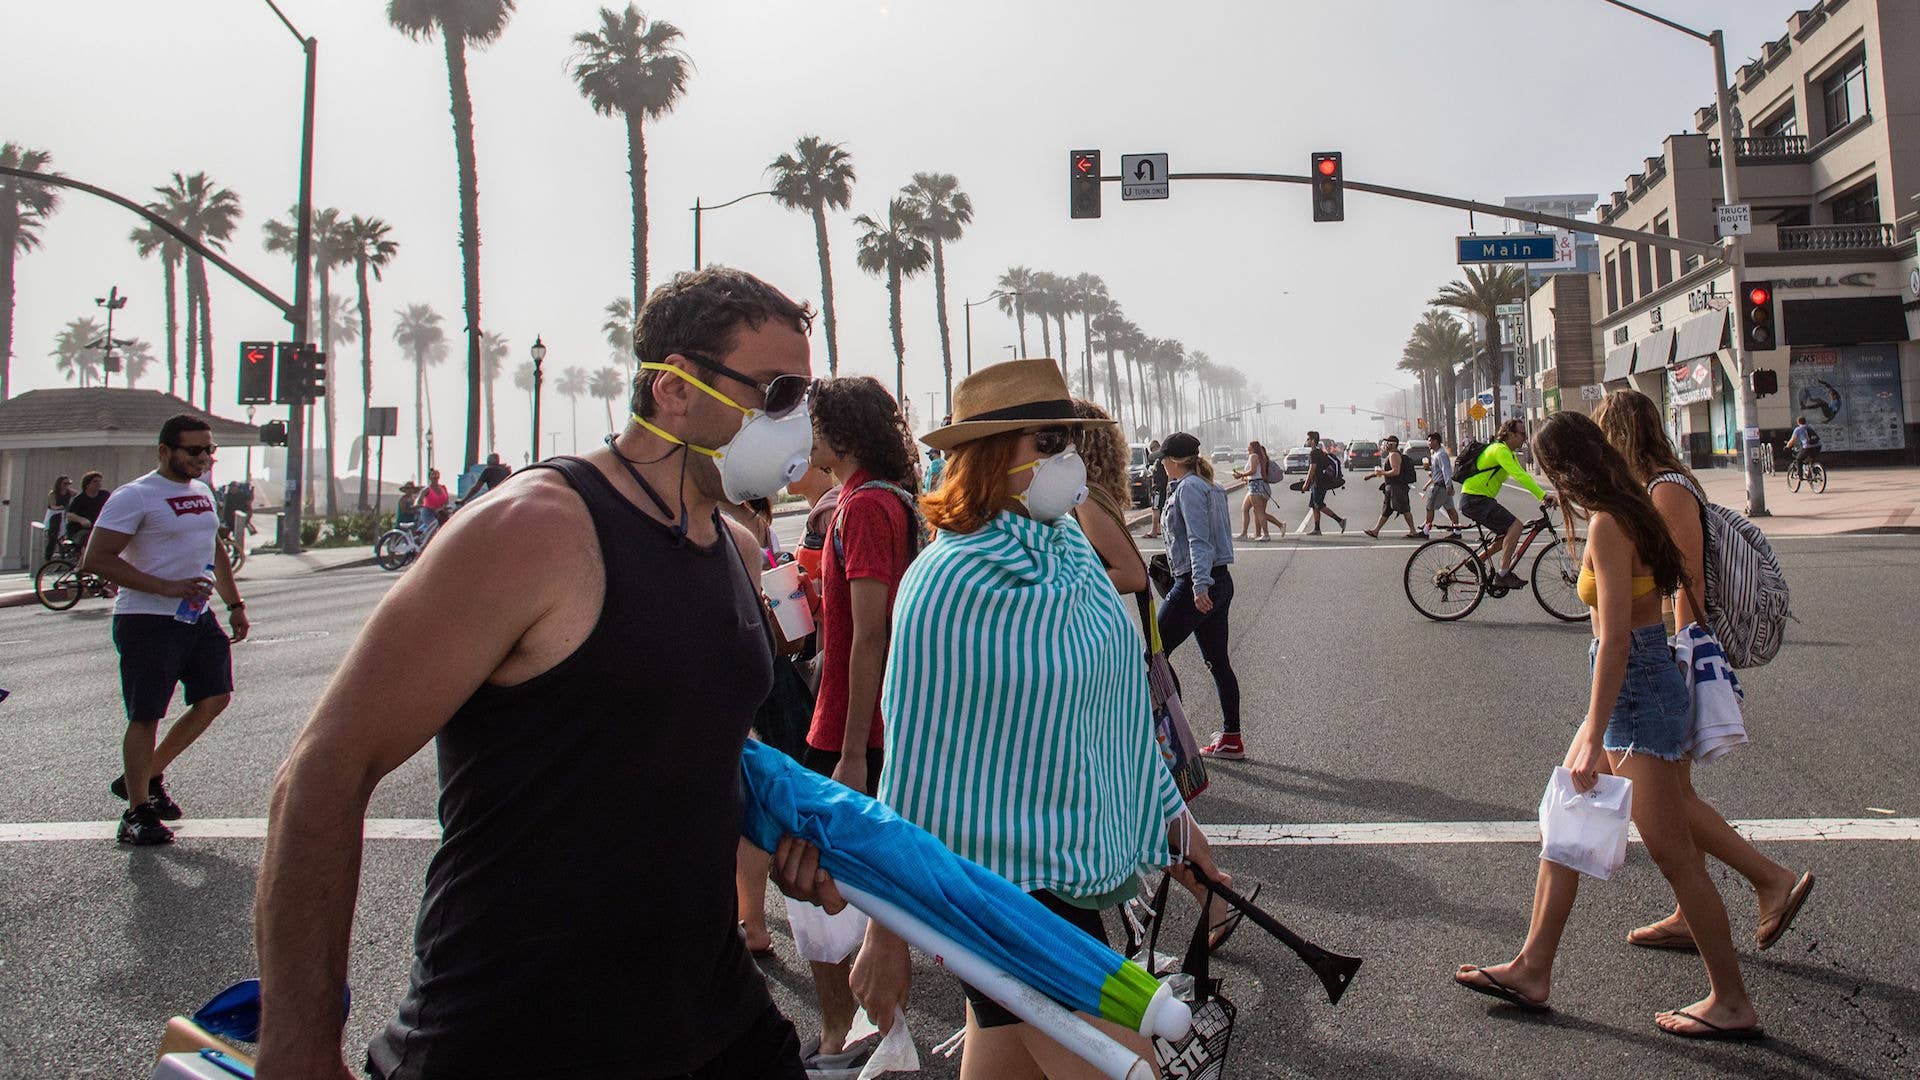 People cross the street amid coronavirus pandemic in Huntington Beach, California